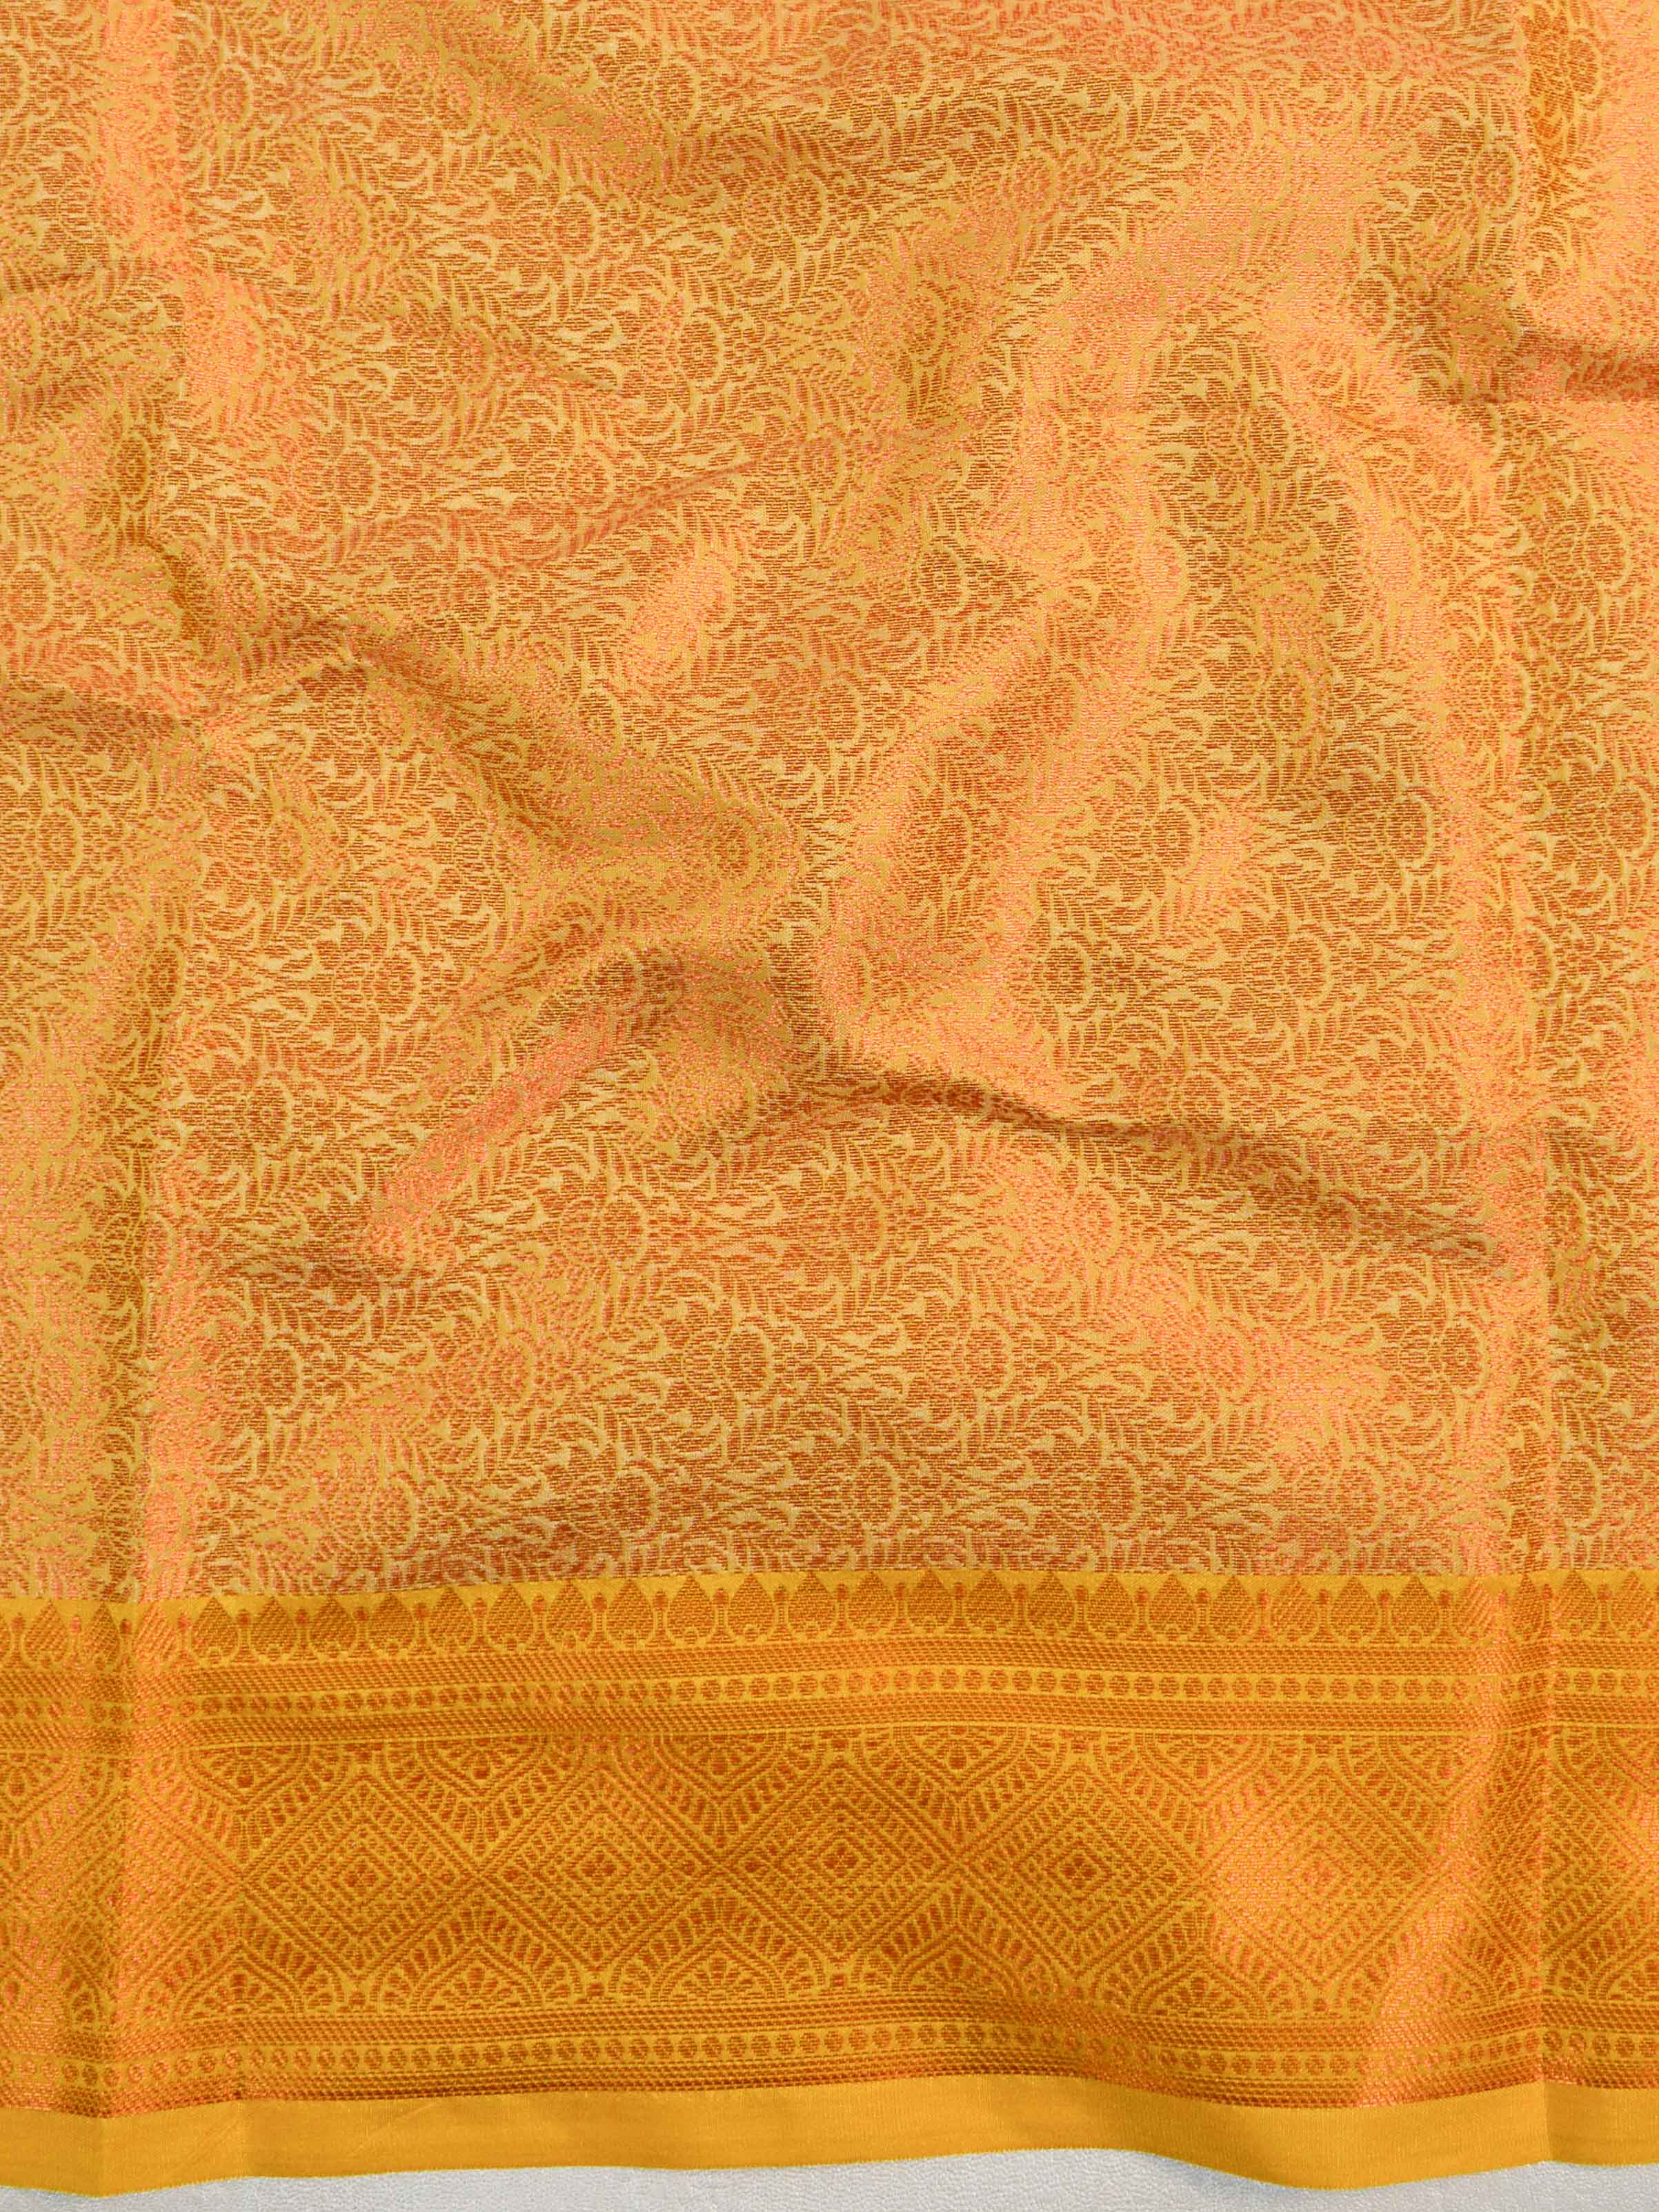 Banarasee Kora Muslin Saree With Floral Tanchoi Design & Skirt Border-Yellow